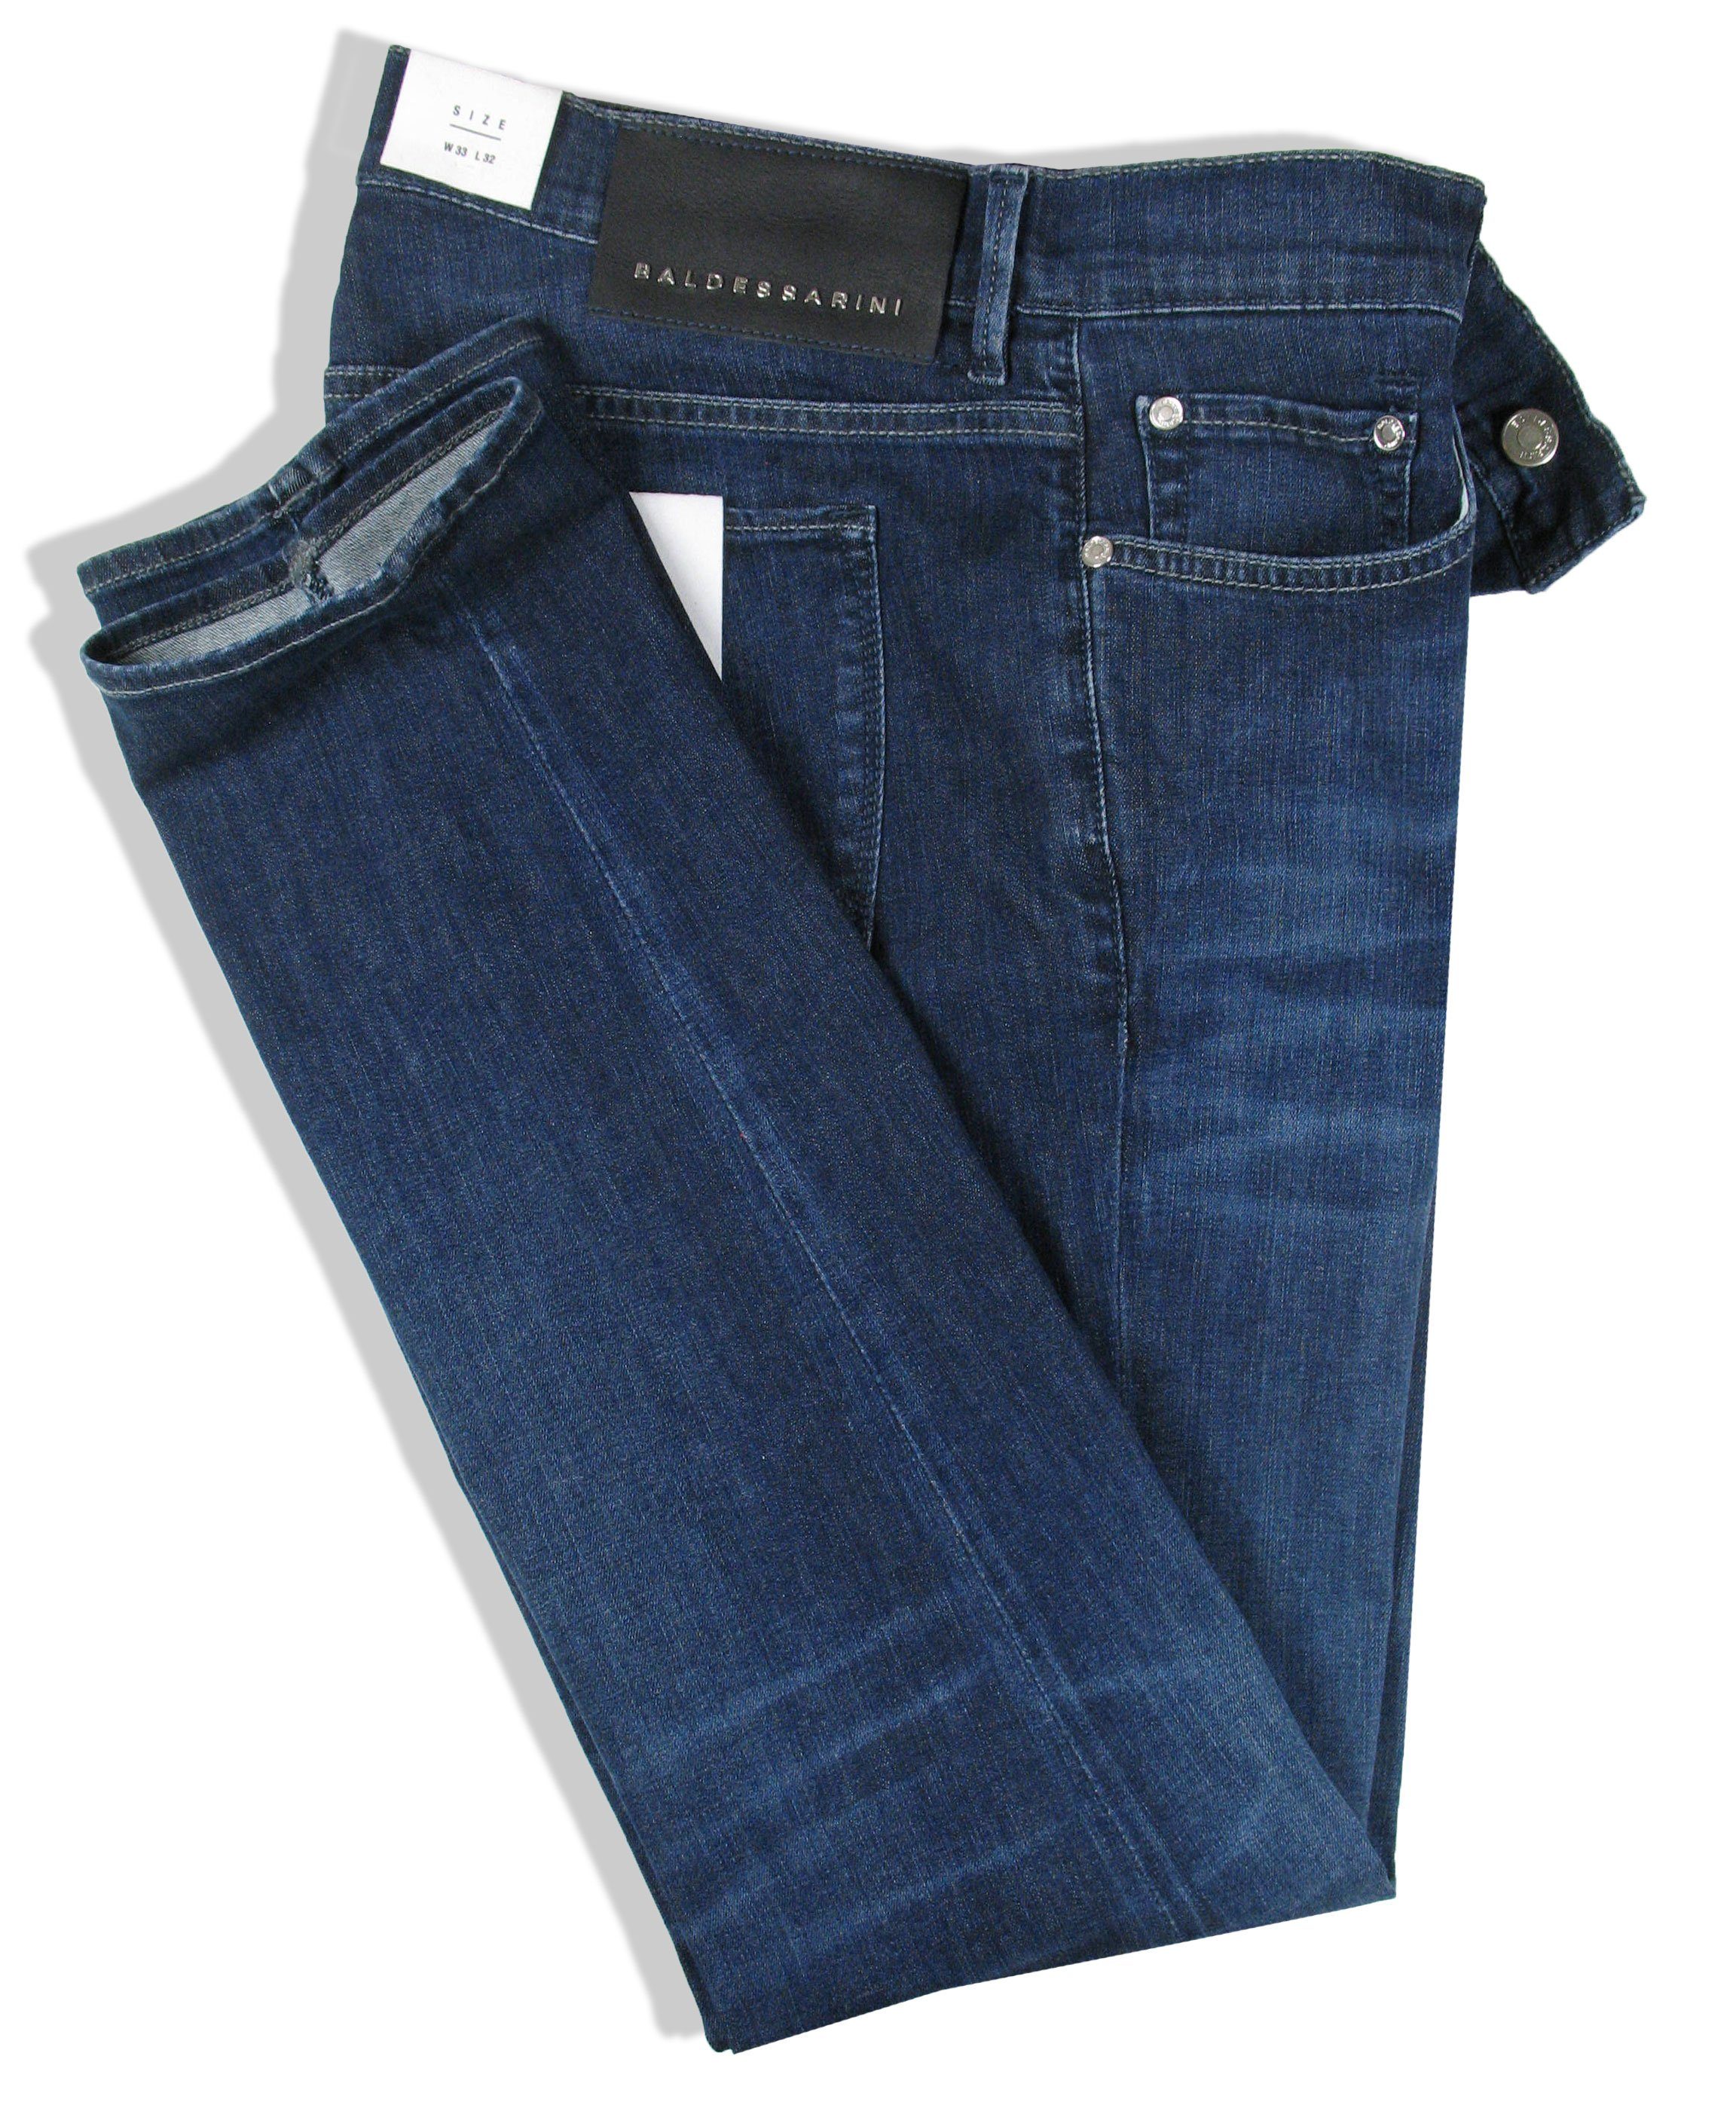 BALDESSARINI 5-Pocket-Jeans John Iconic Stretch Ocean Used Denim Blue